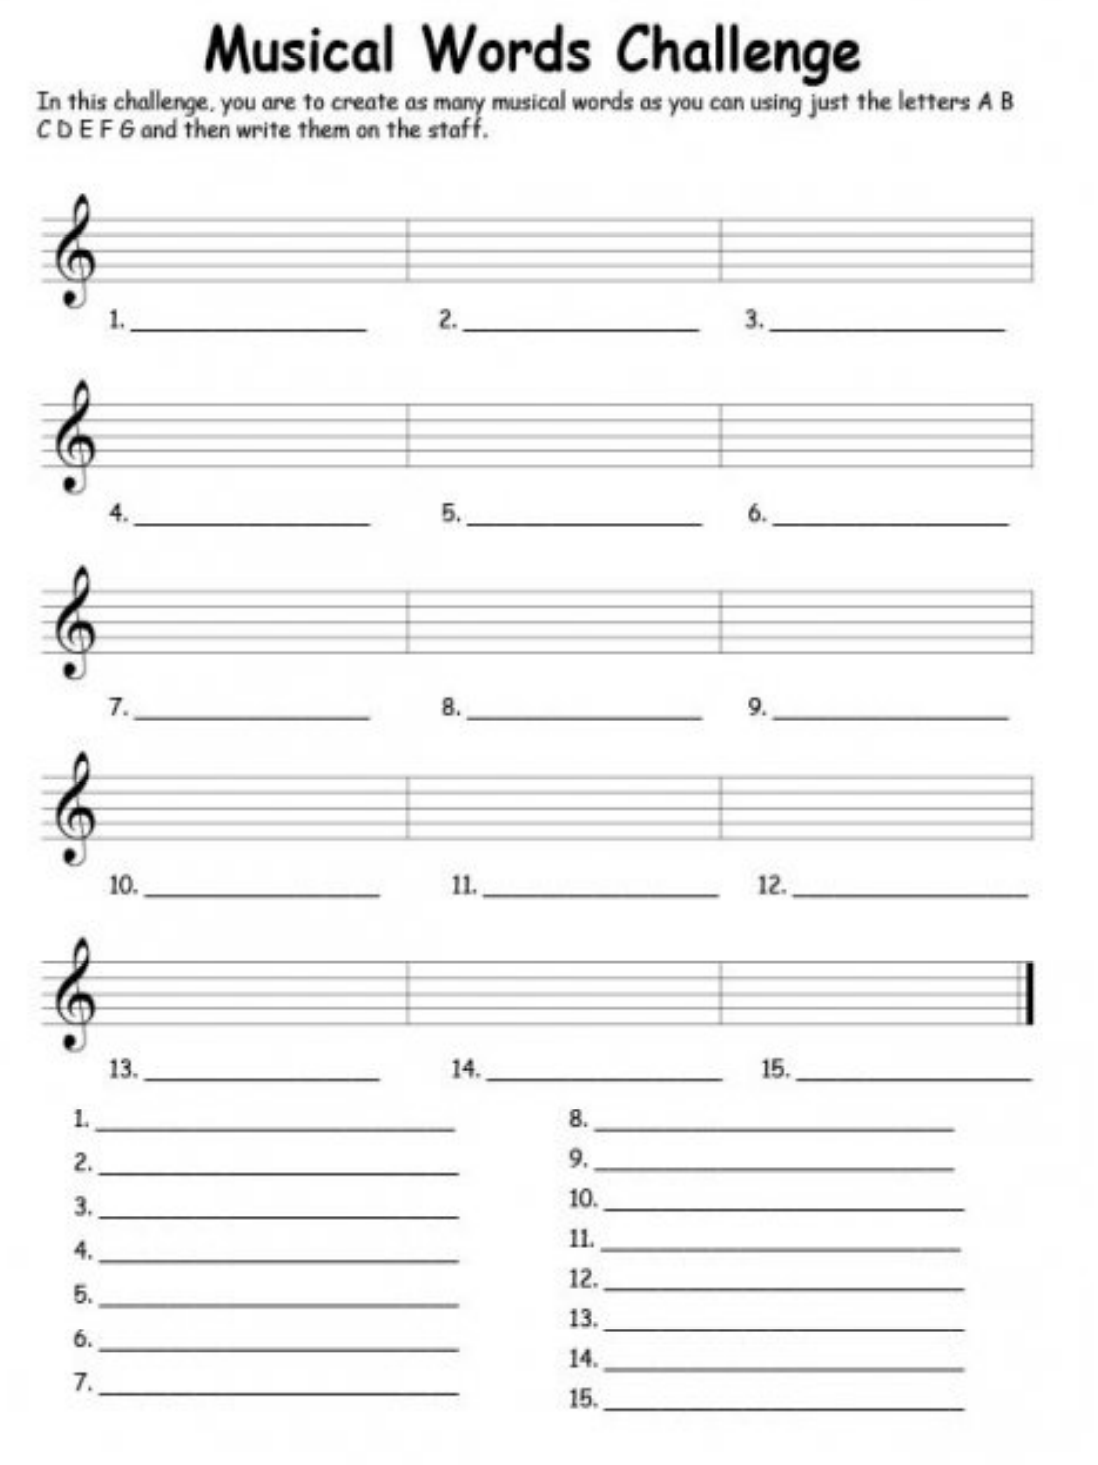 Musical Words Challenge Sheet